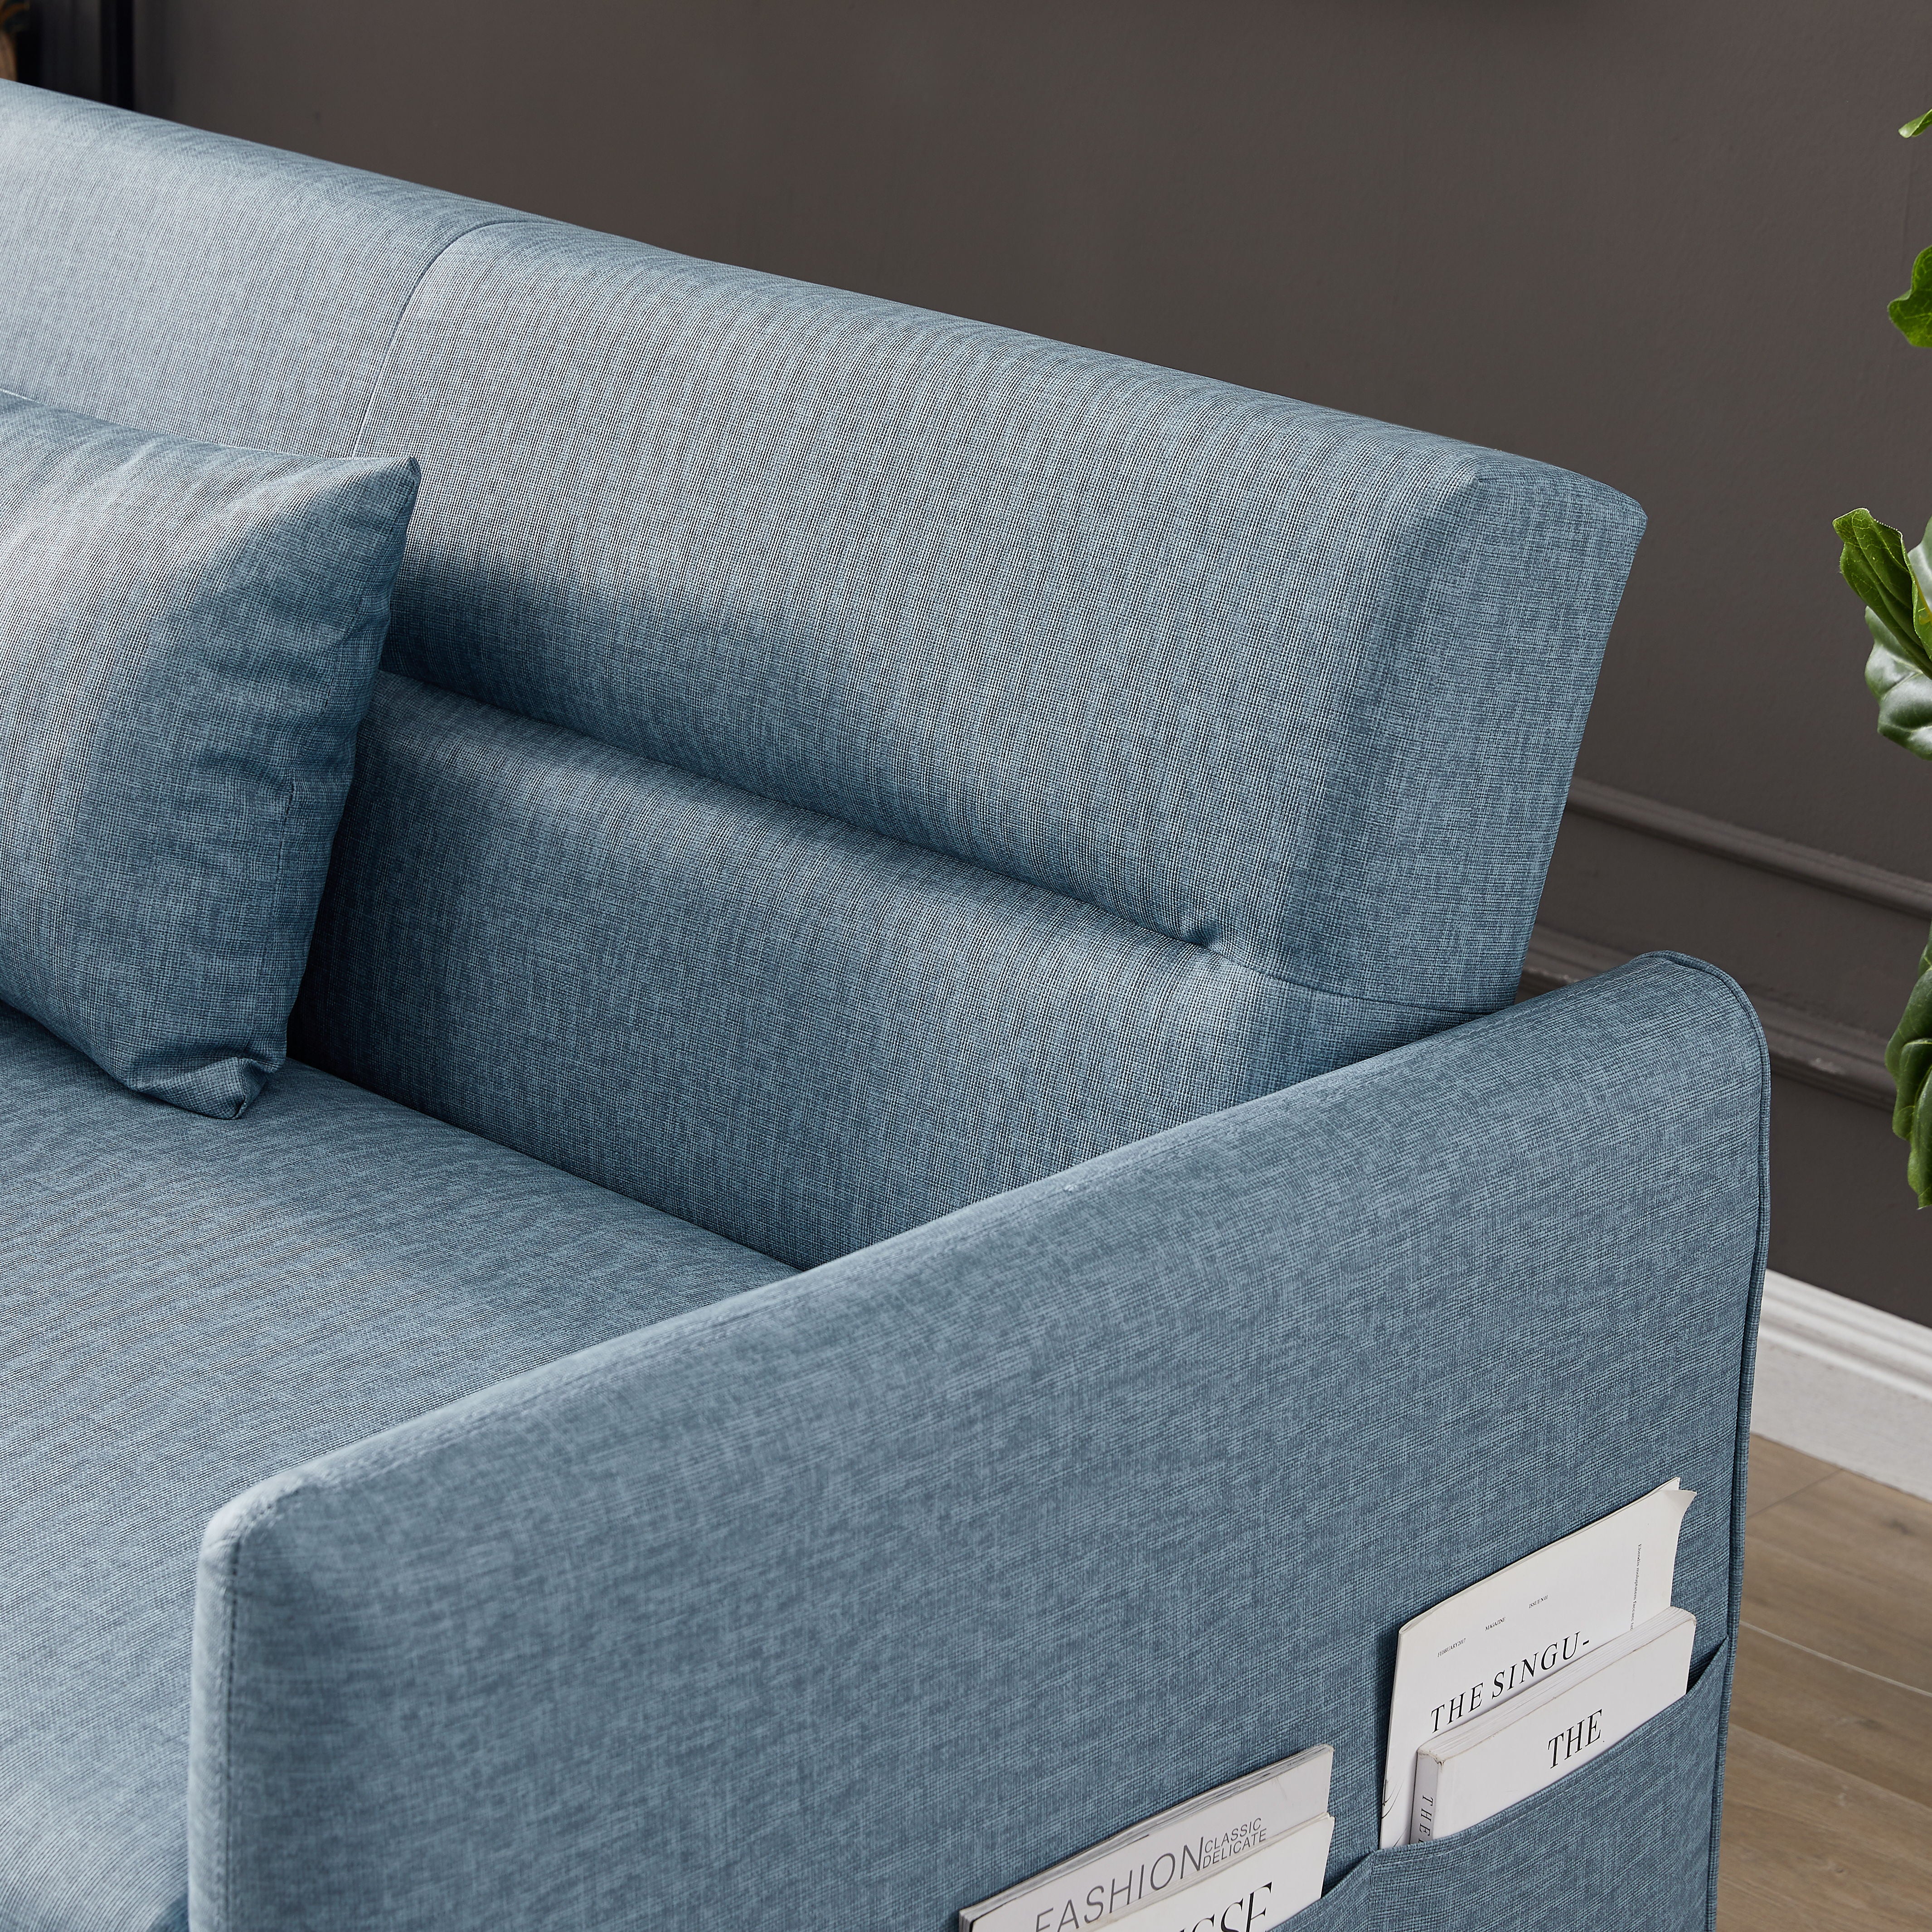 2033 Sky Blue Cloth Grain Leather (PU) Leisure Two-Seat Sofa